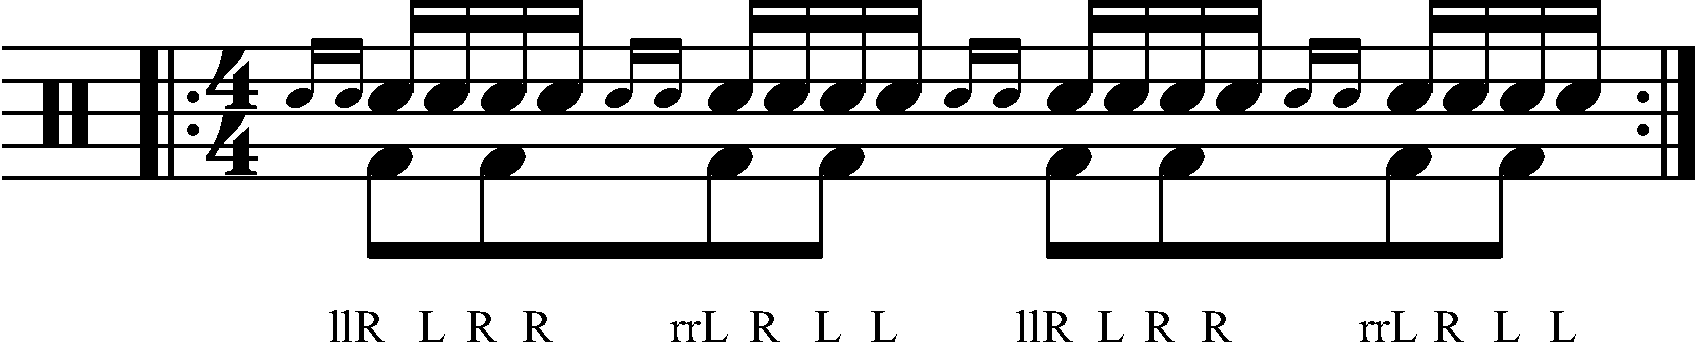 Adding eighth note feet under a Dragadiddle